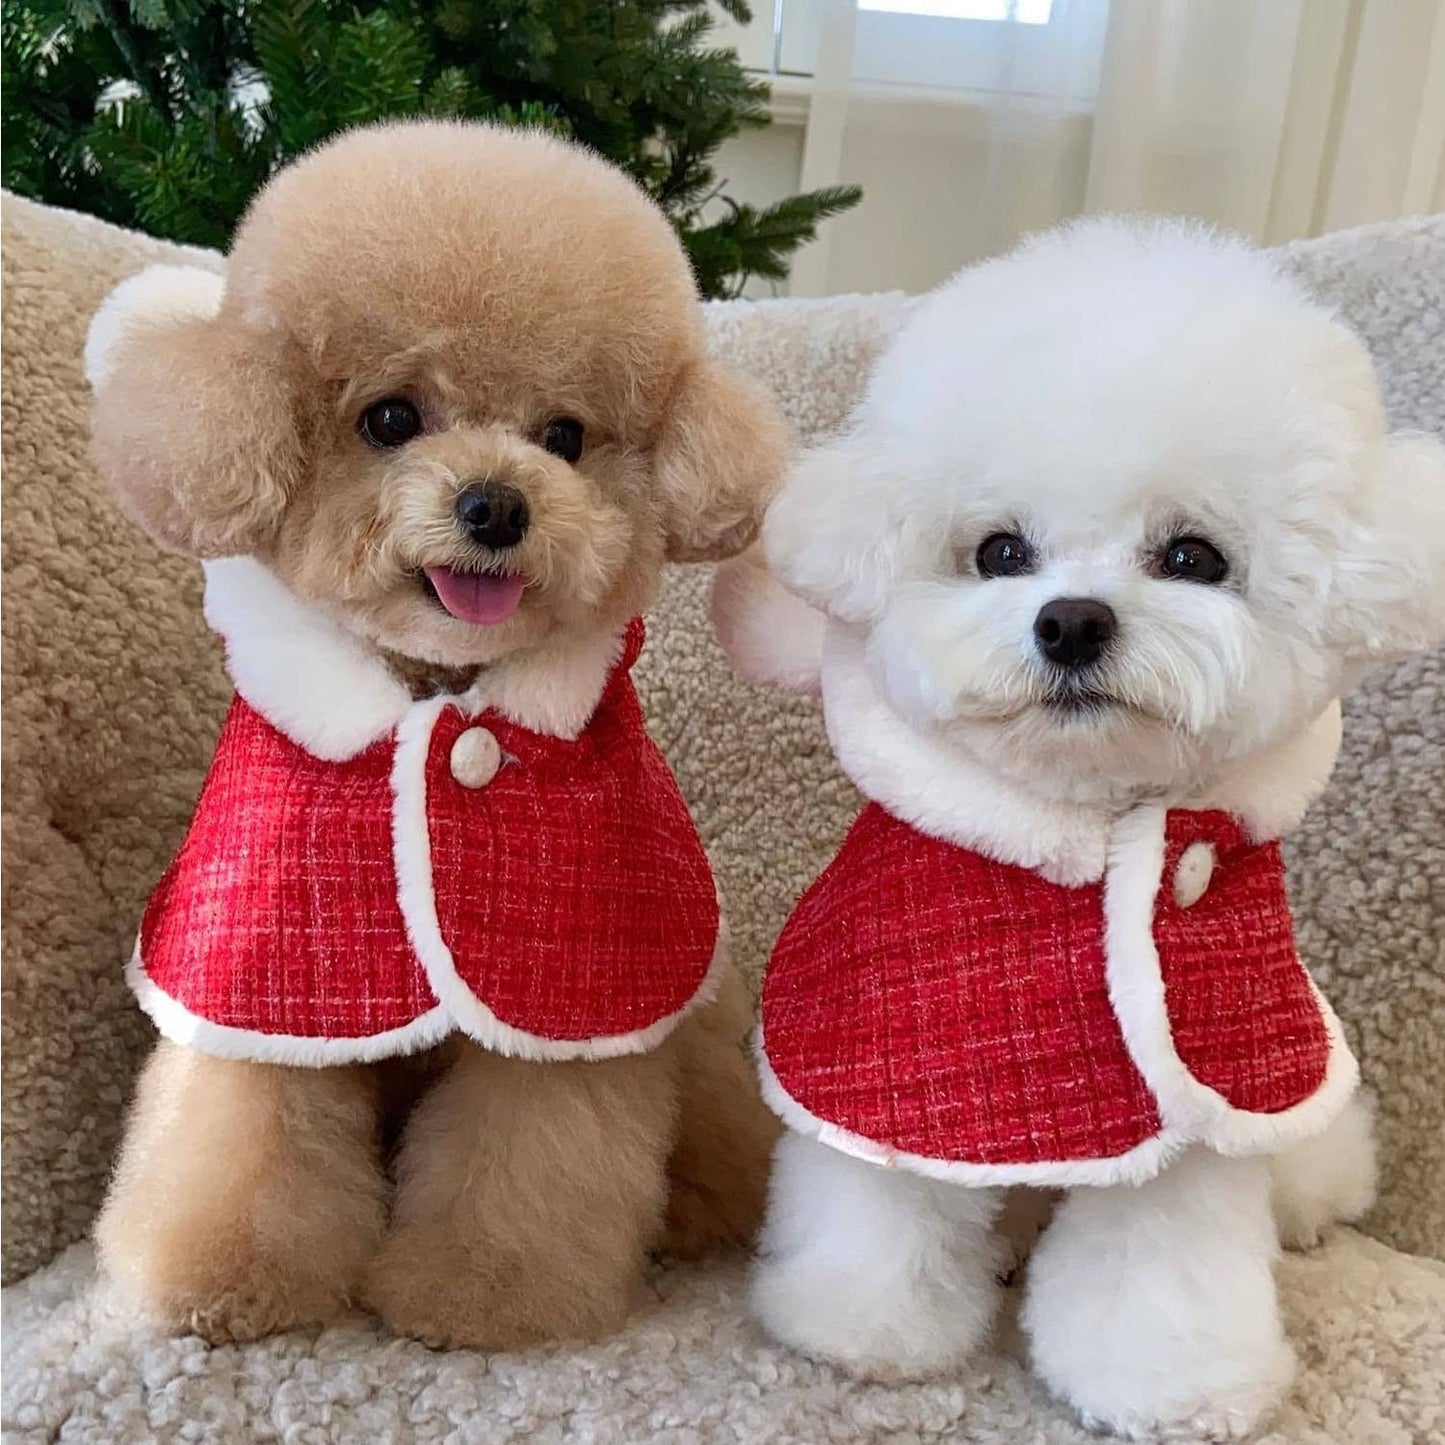 Dog New Year Outfit, Pet Cheongsam, Dog Tang Costume Warm Coat for Puppy Small Medium Dog (Cape, Neck Girth 10") Animals & Pet Supplies > Pet Supplies > Dog Supplies > Dog Apparel HDKUW   